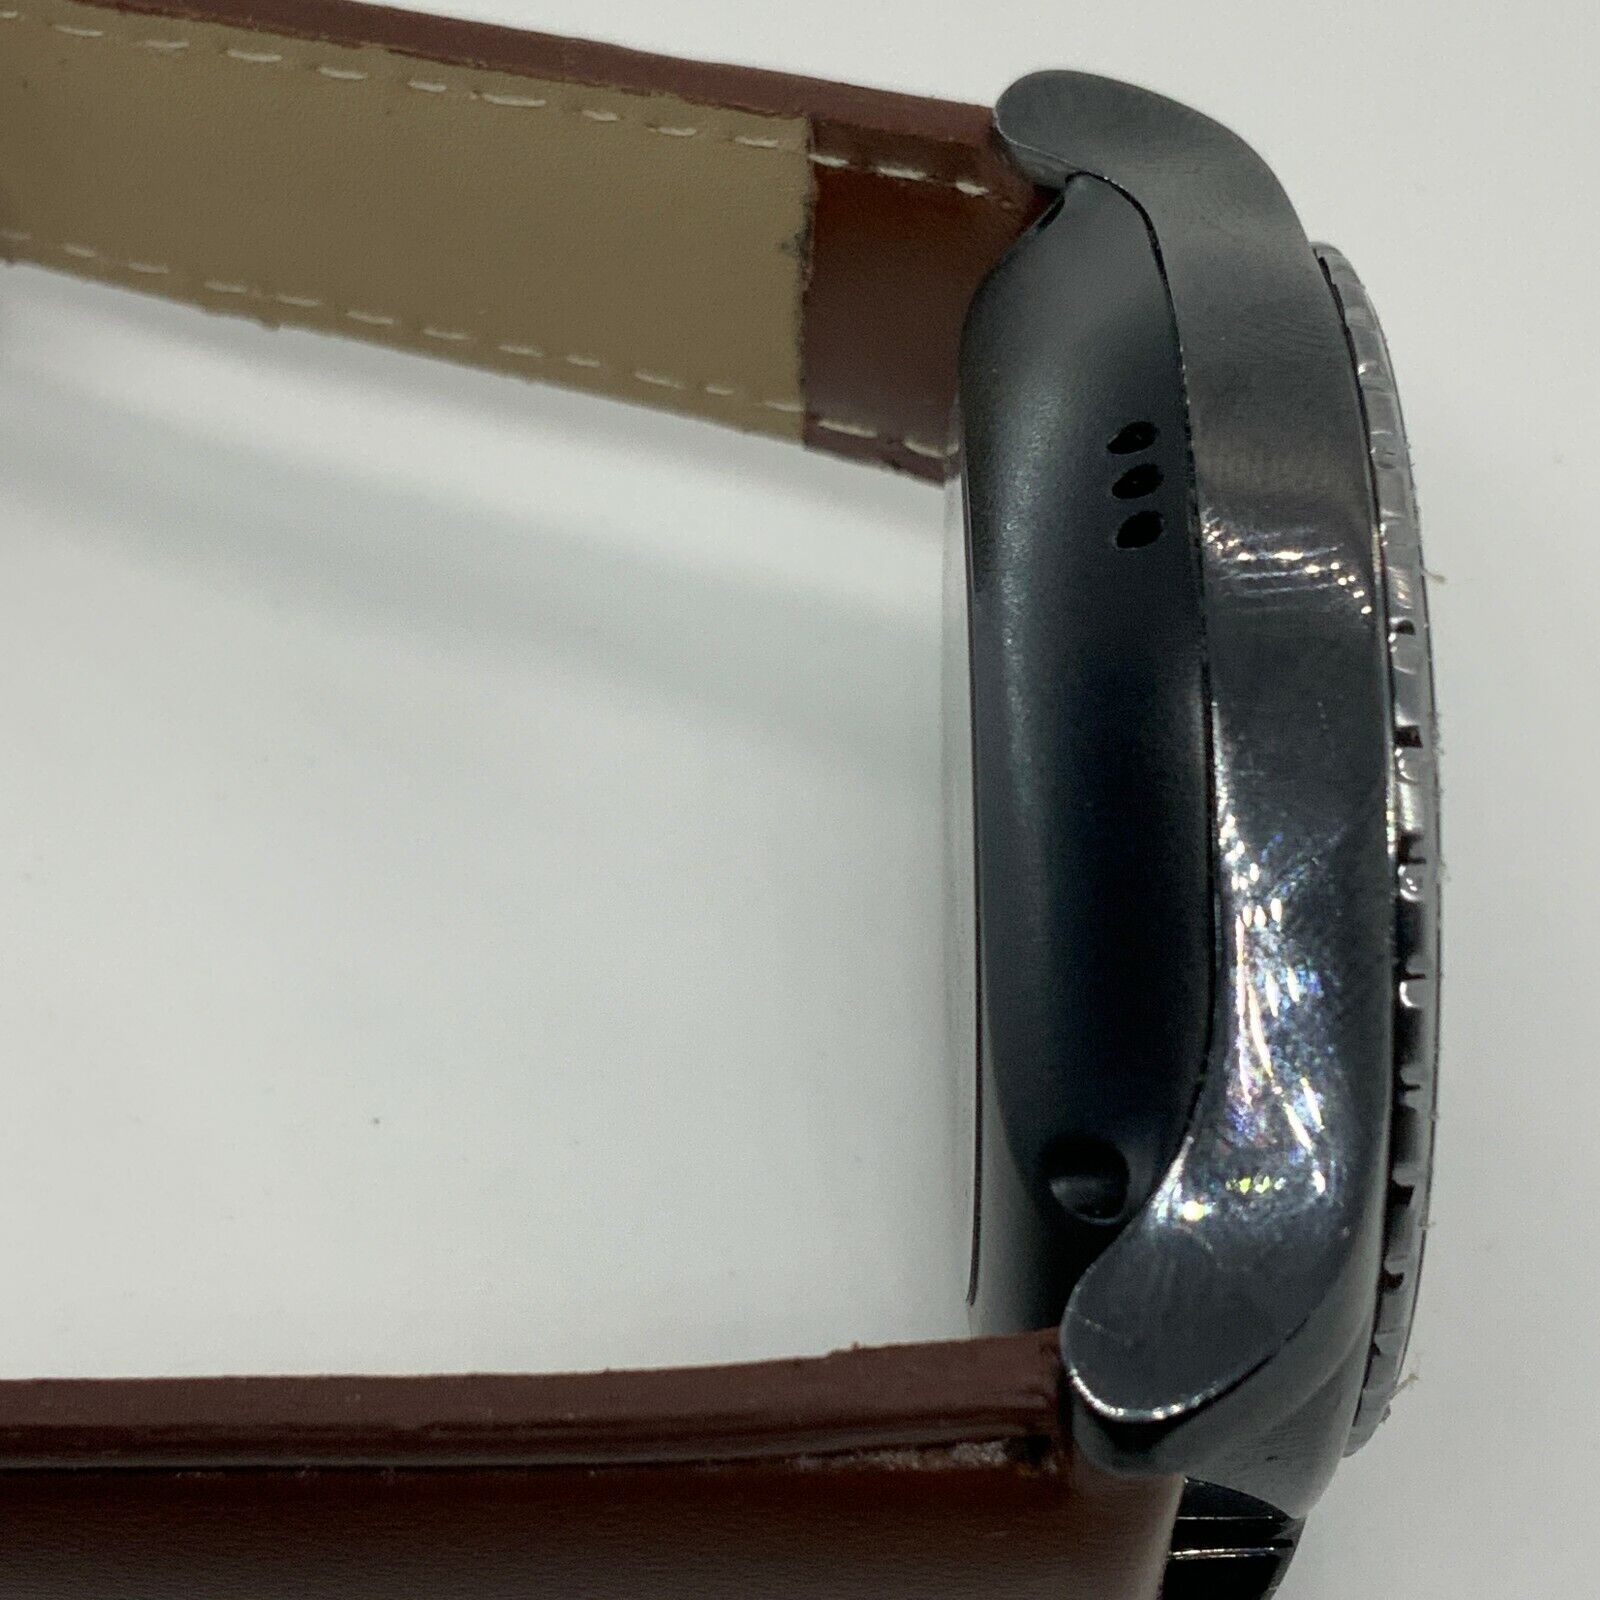 Samsung Gear S2 SM-R735T Smartwatch Stainless Steel (T-Mobile) Deficyt super cena specjalna